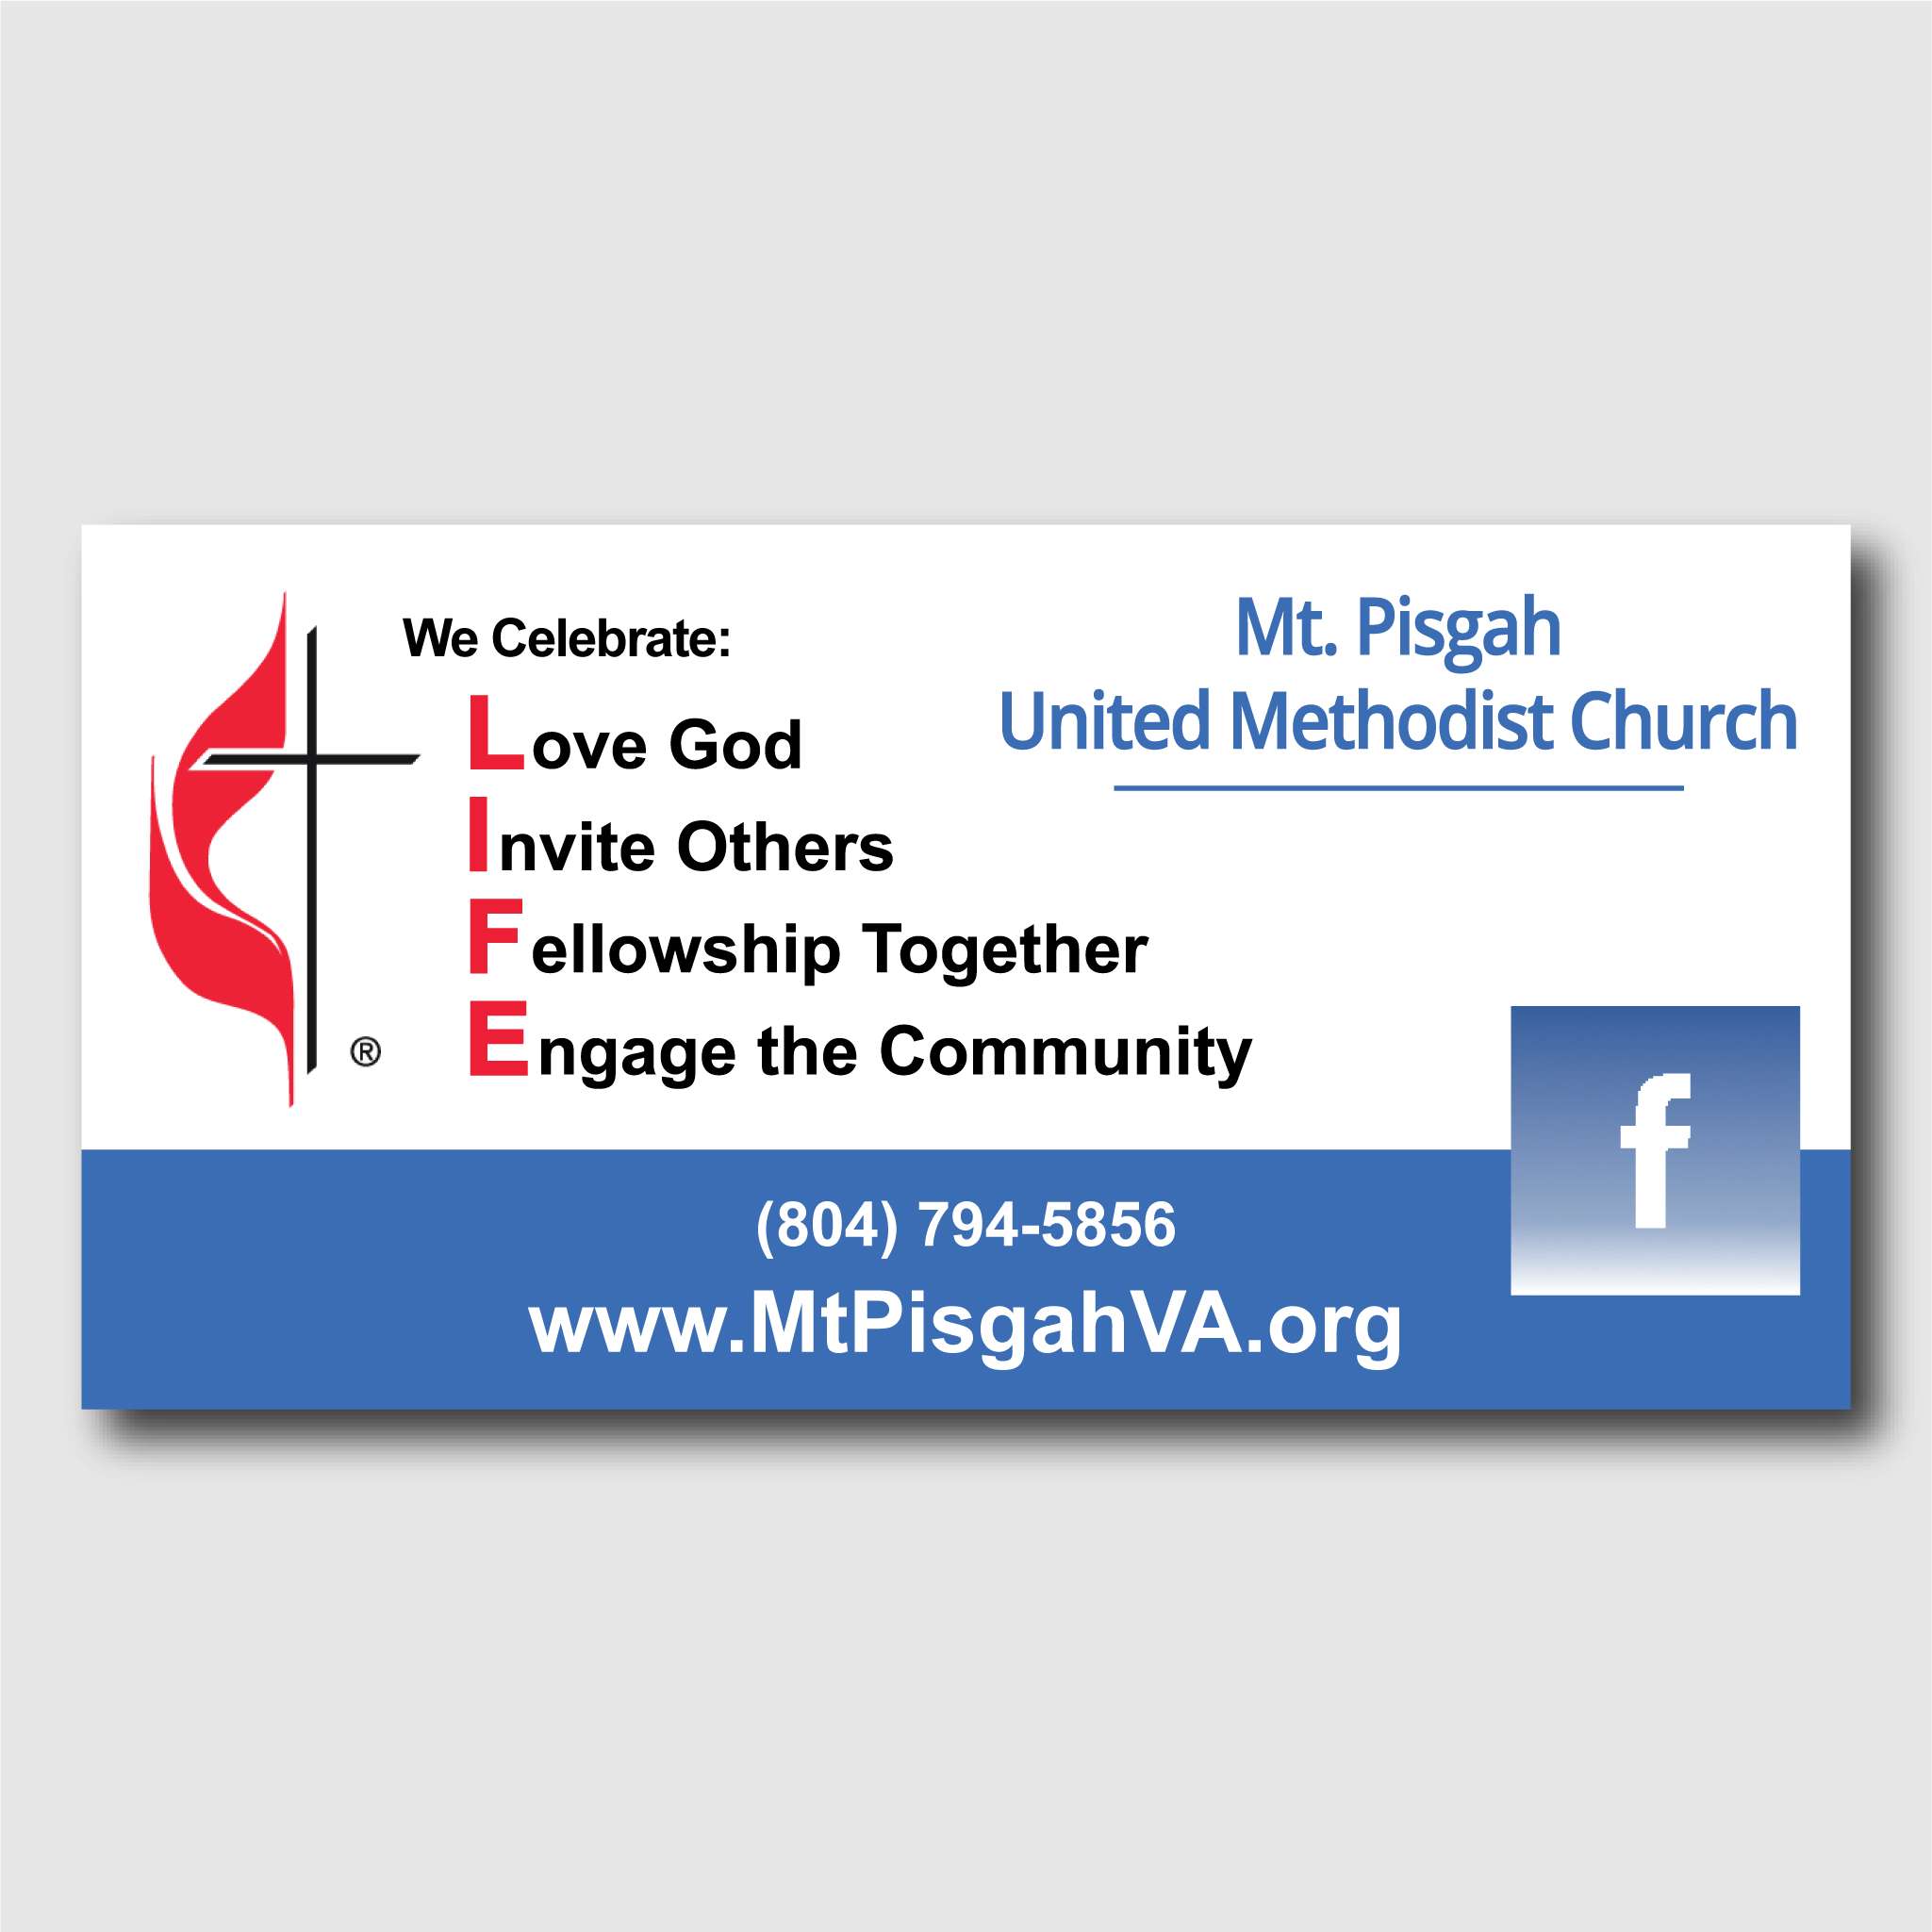 Mt. Pisgah United Methodist Church - banner-01